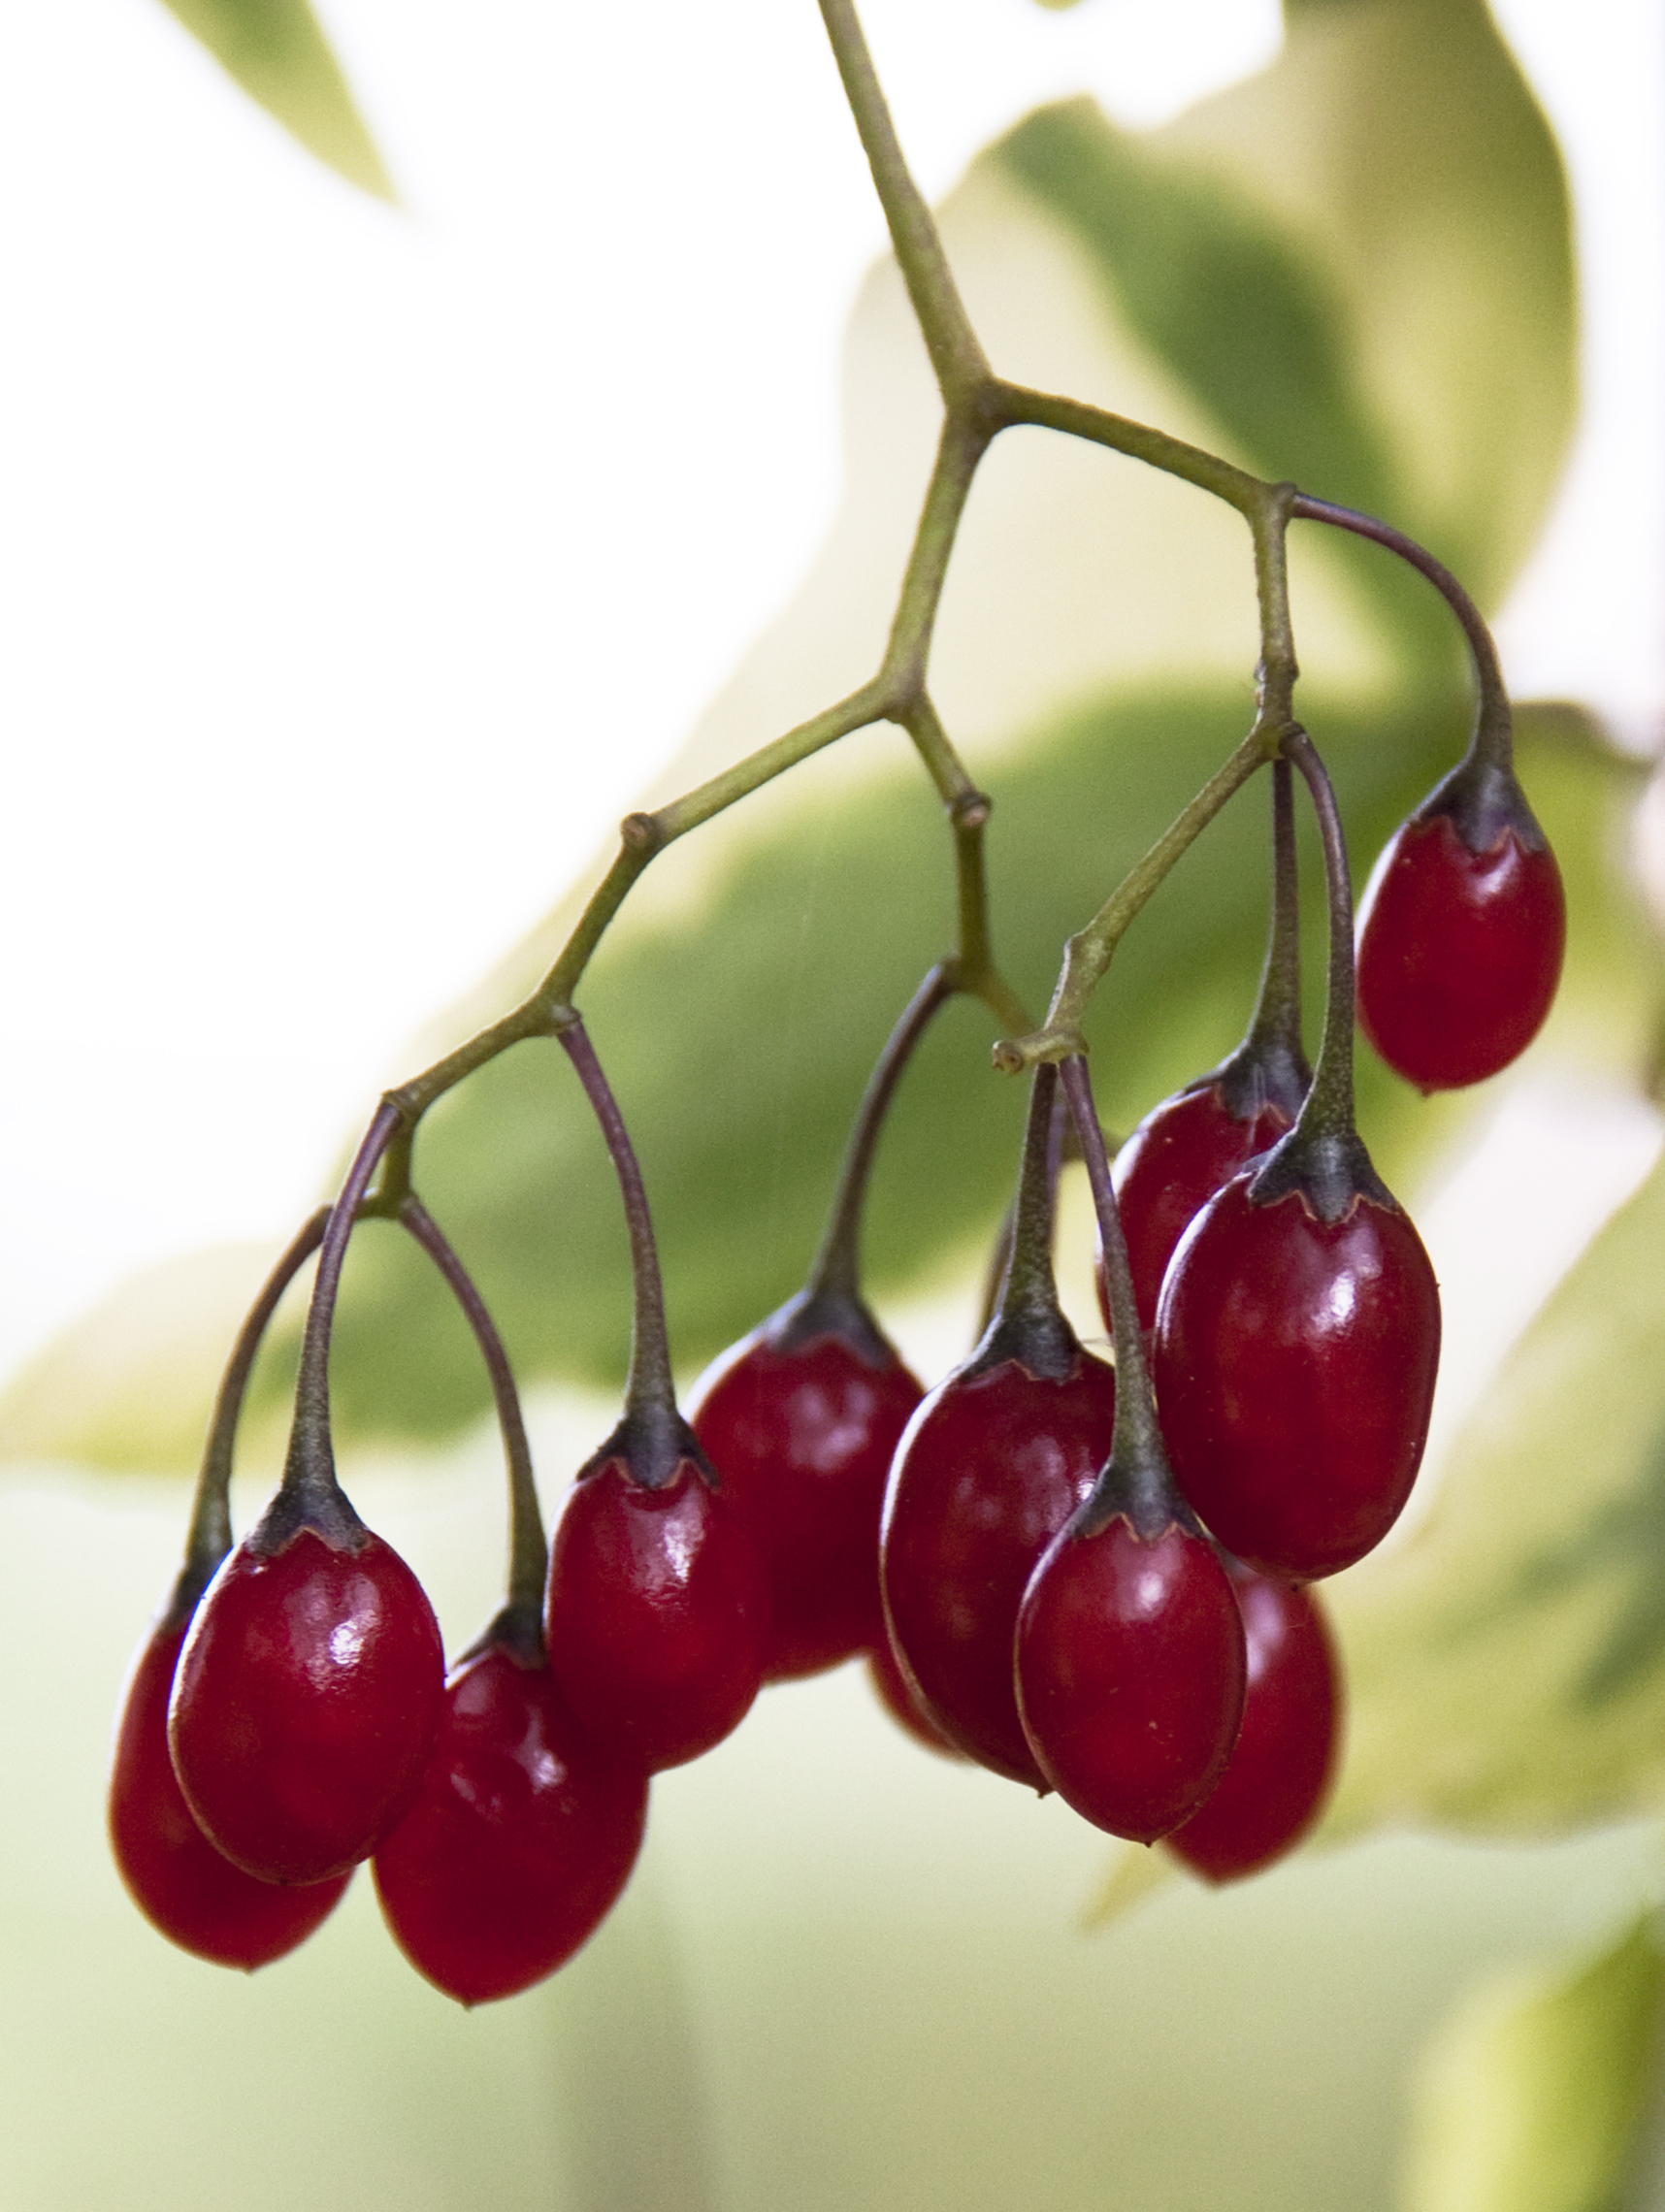 File:Red Berries (4010995613).jpg - Wikimedia Commons